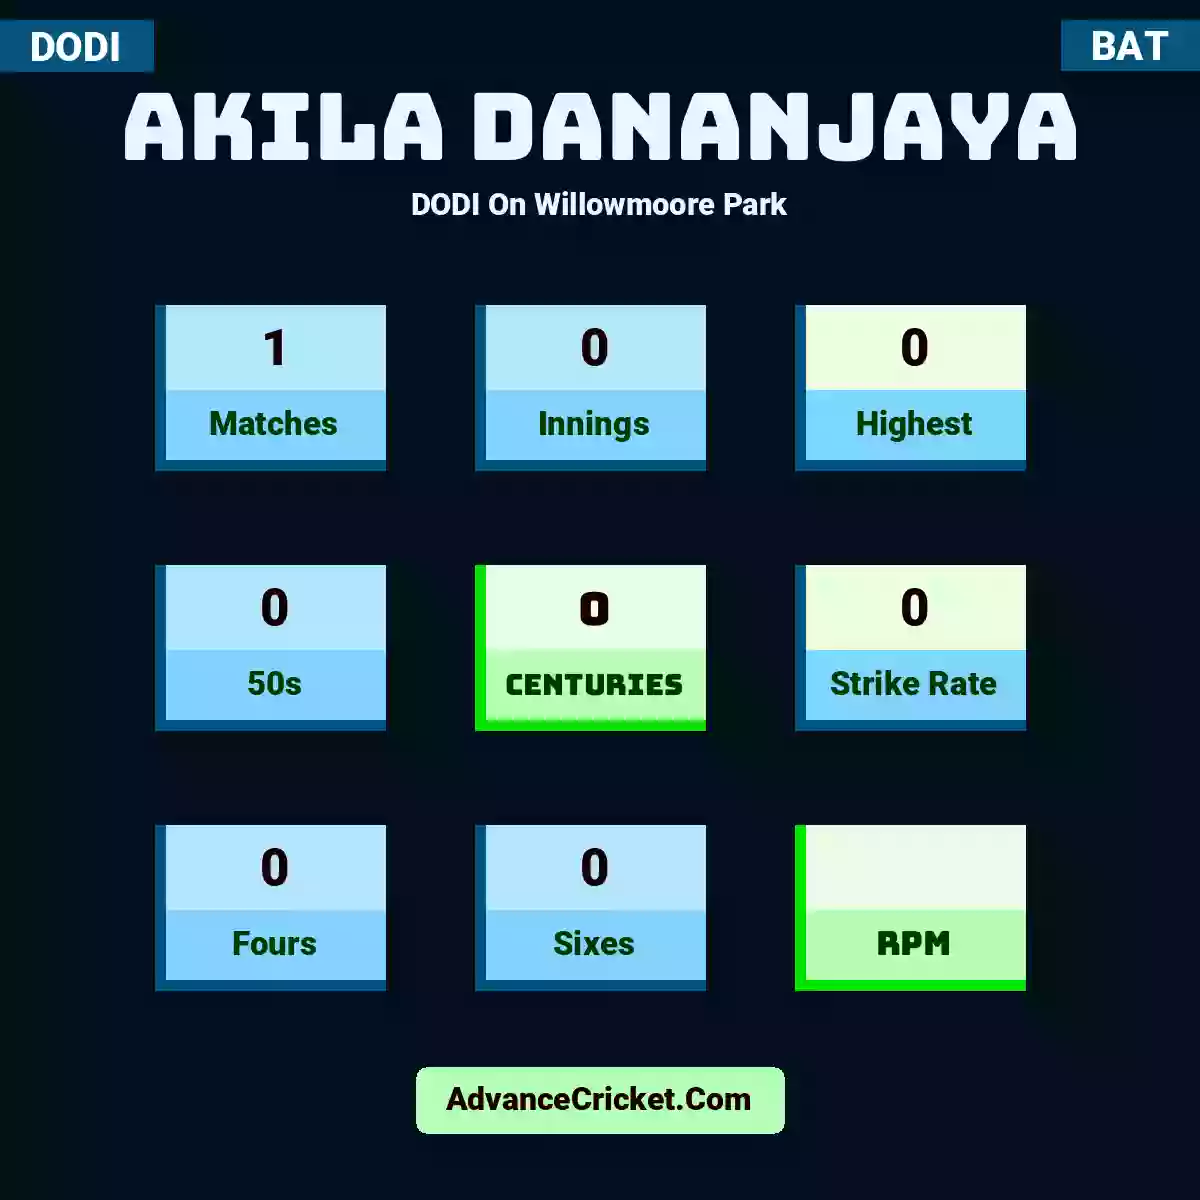 Akila Dananjaya DODI  On Willowmoore Park, Akila Dananjaya played 1 matches, scored 0 runs as highest, 0 half-centuries, and 0 centuries, with a strike rate of 0. A.Dananjaya hit 0 fours and 0 sixes.